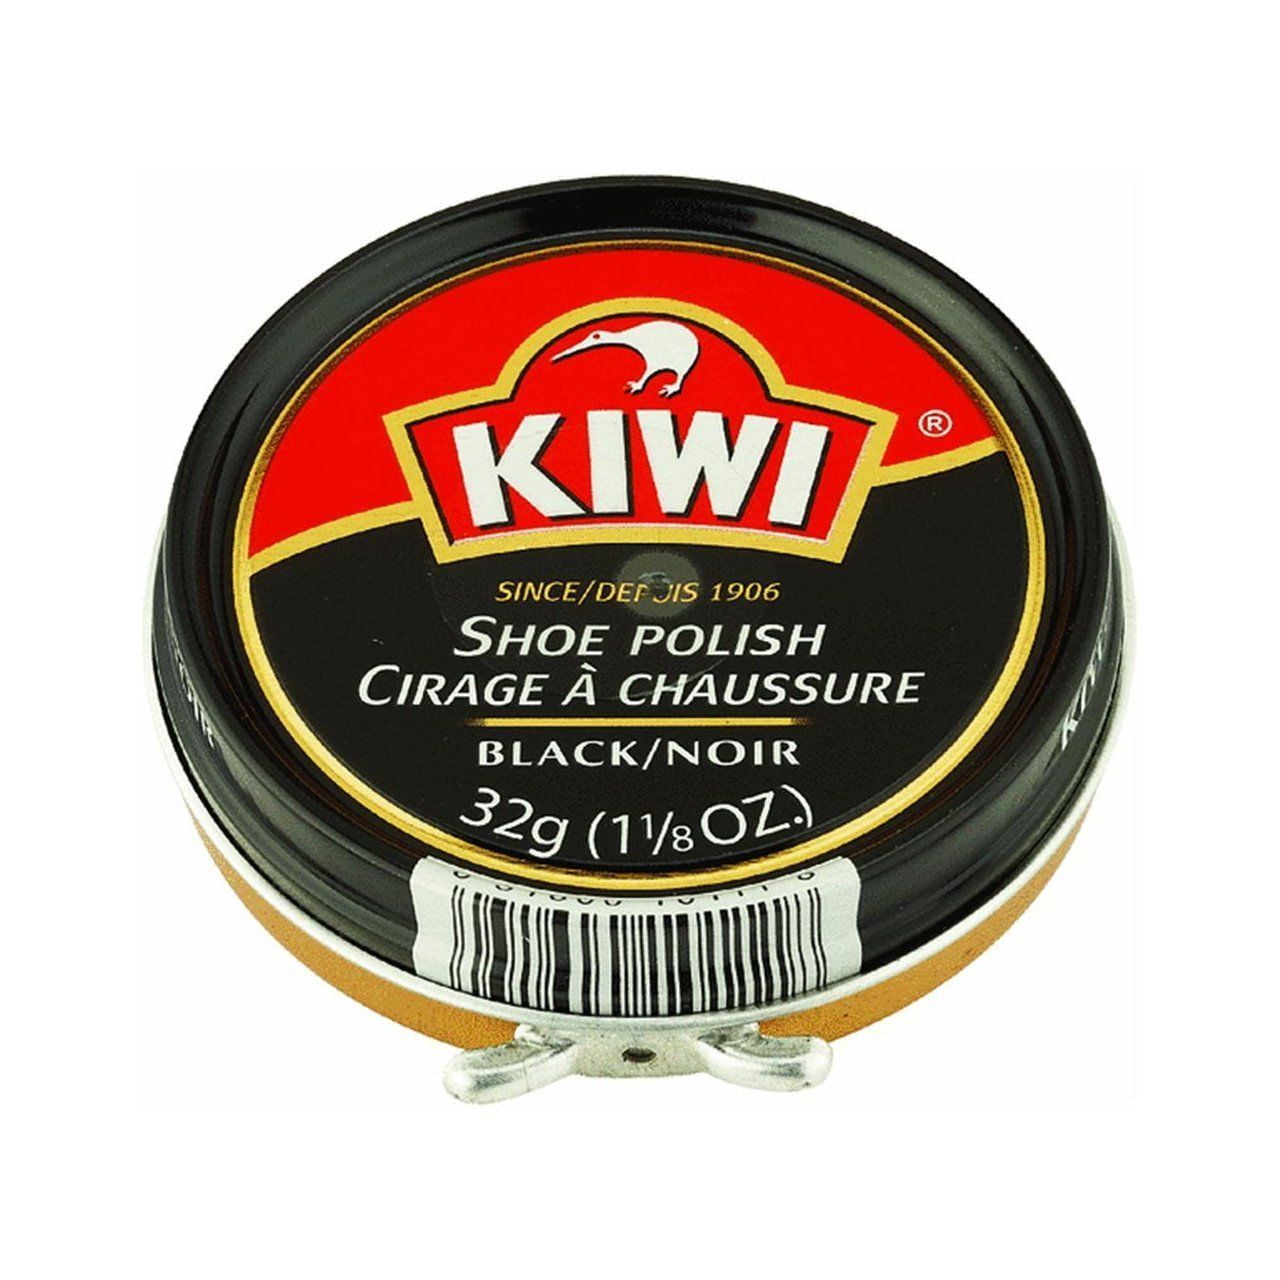 kiwi burgundy shoe polish